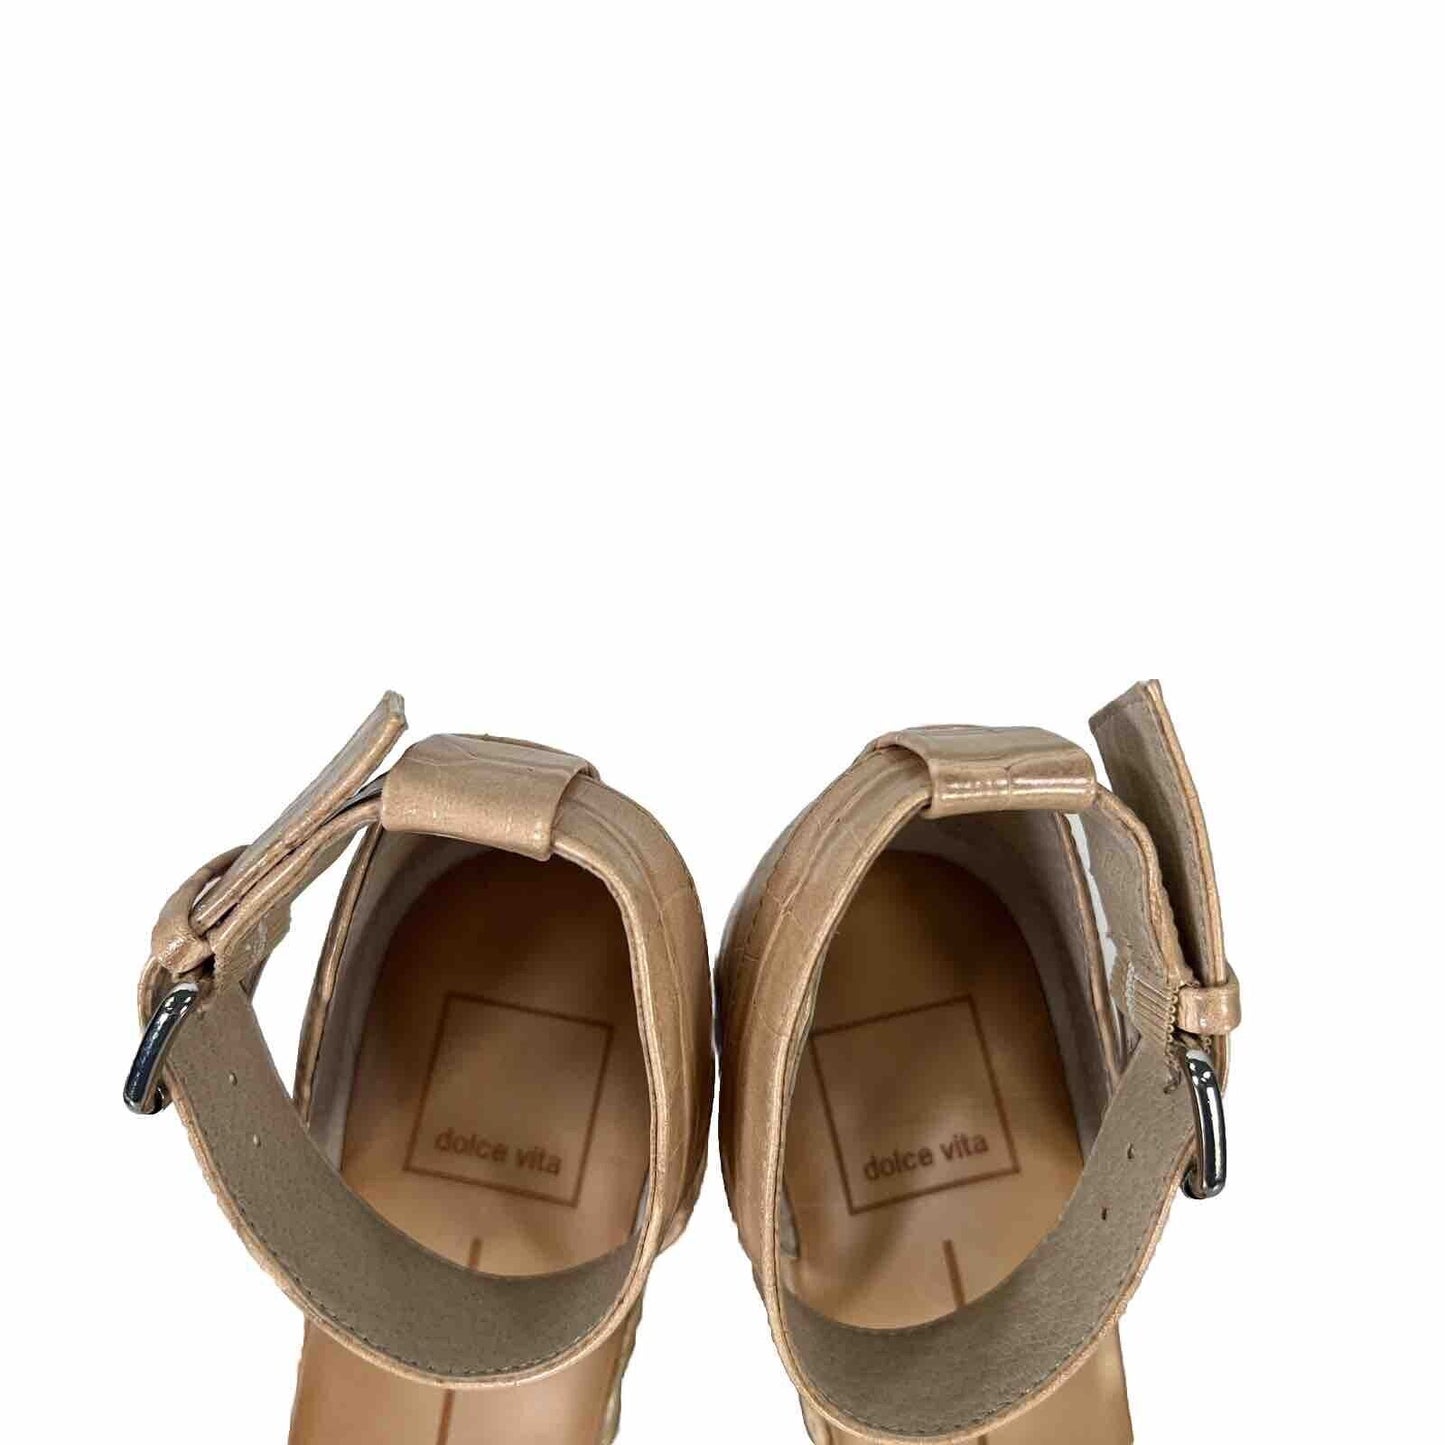 Dolce Vita Women's Beige/White Woven Open Toe Wedge Sandals - 7